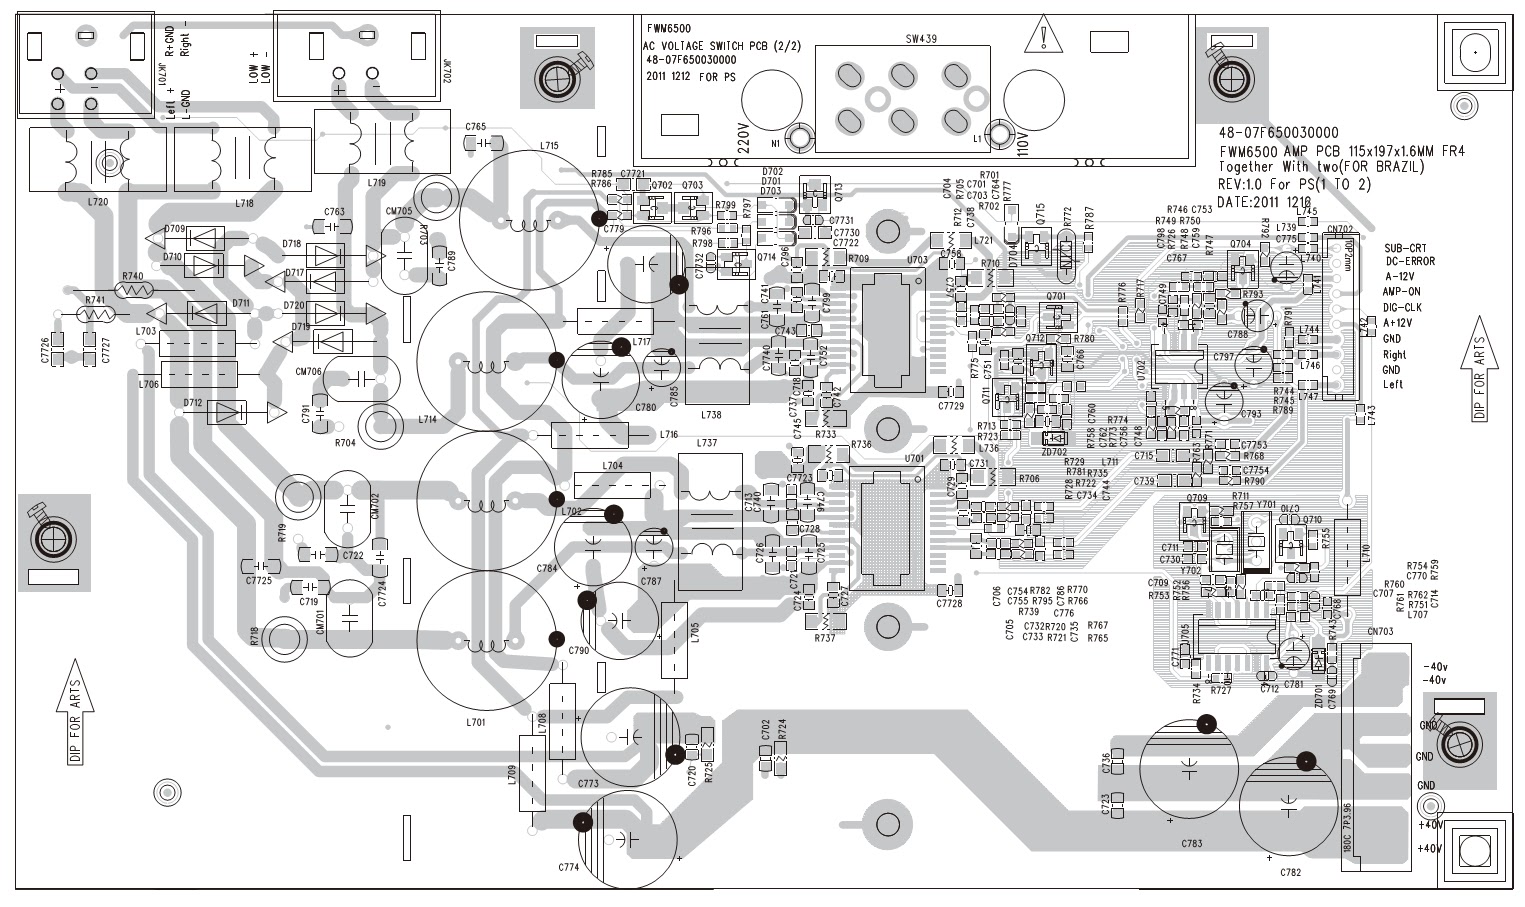 Electro help: PHILIPS FWM6500 - SCHEMATIC DIAGRAMS - Printed Circuit Boards